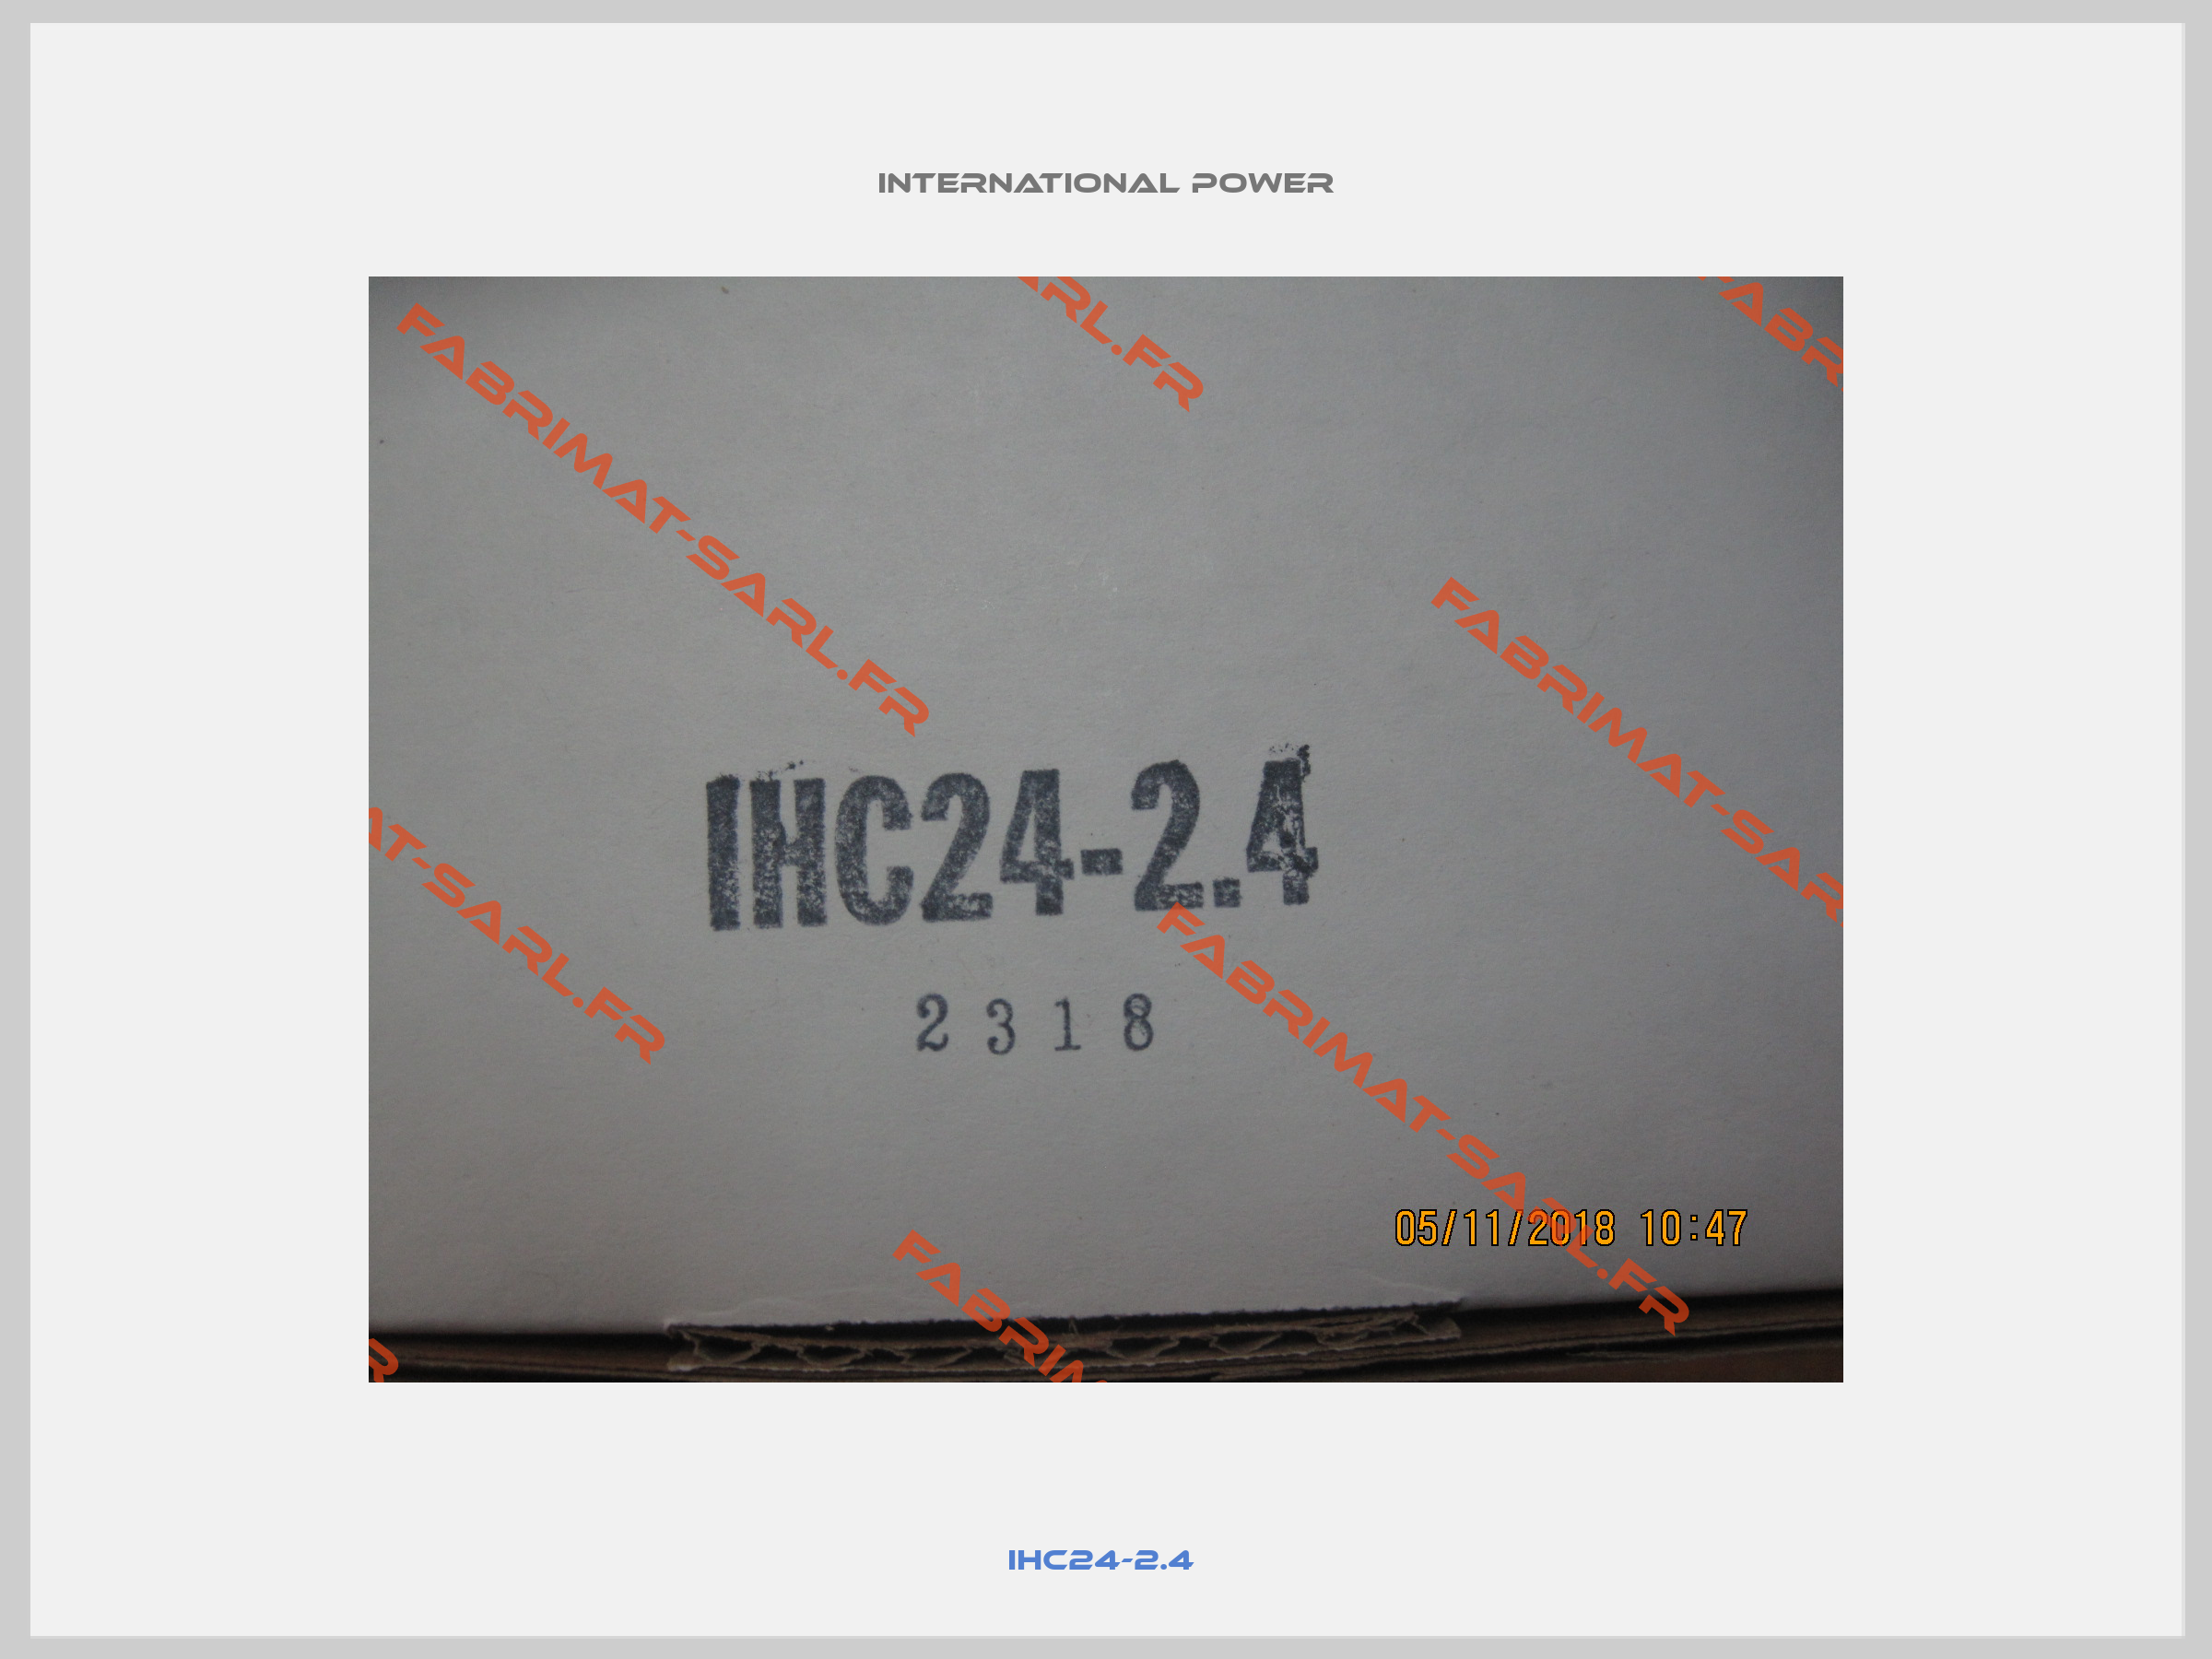 IHC24-2.4 -1